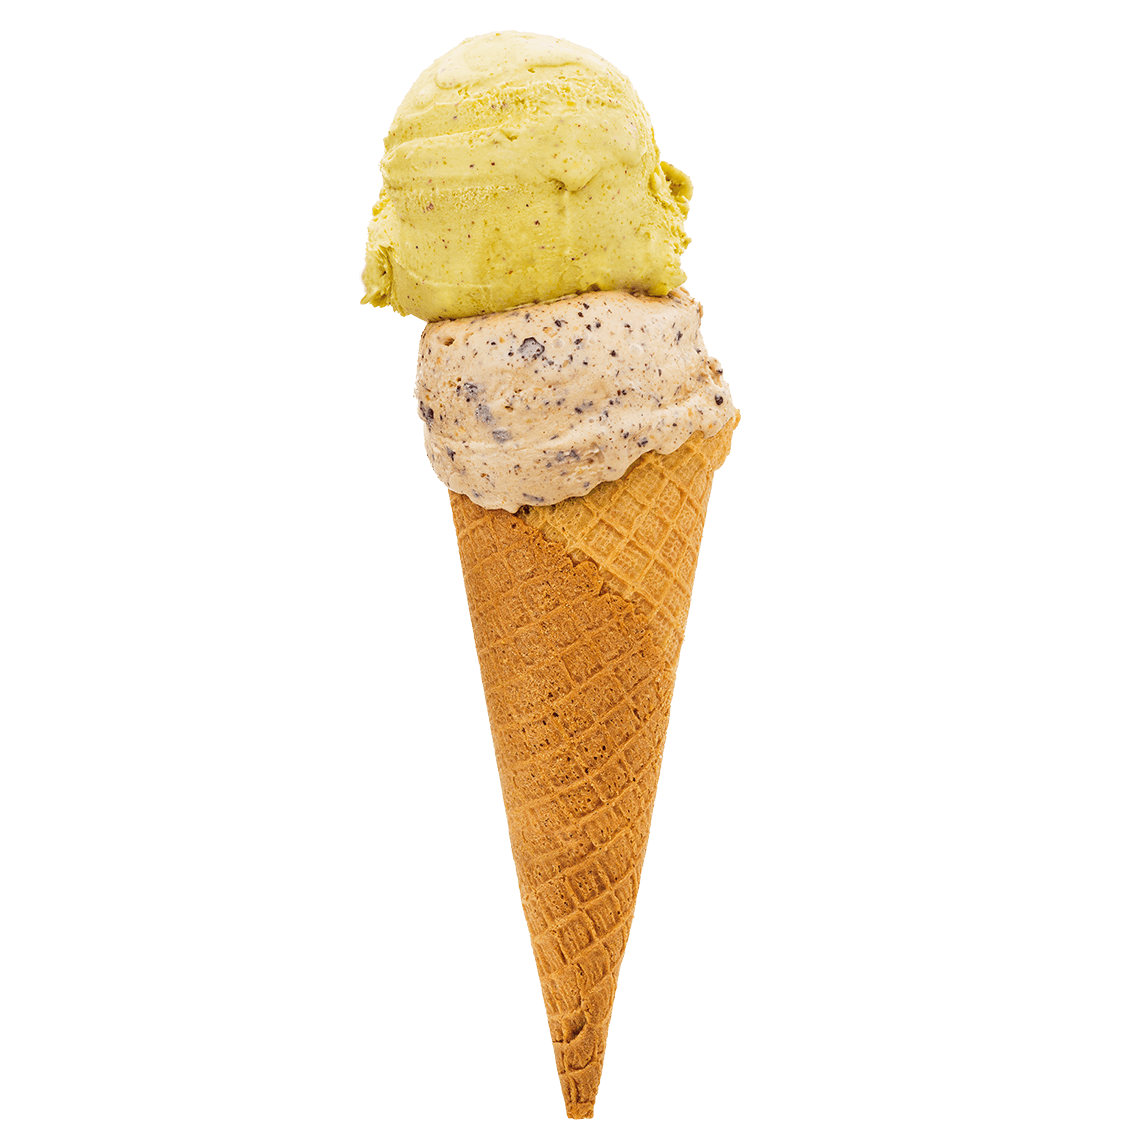 Lemon and Bacio ice cream